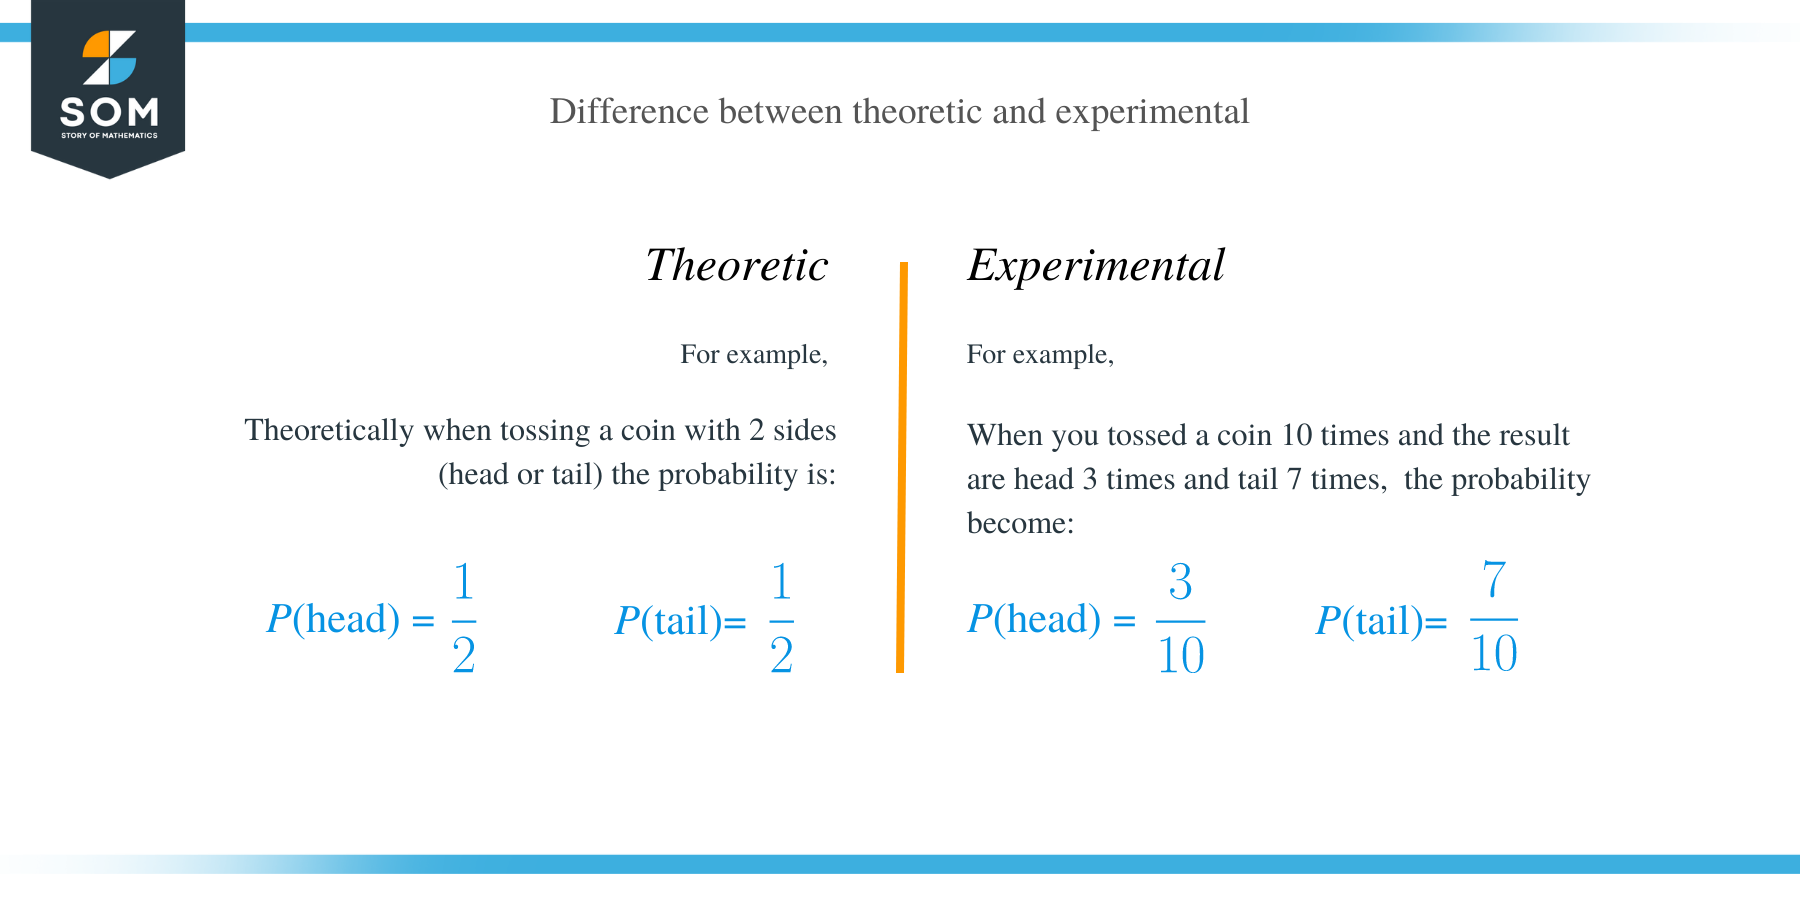 Experimental probability vs theoretic